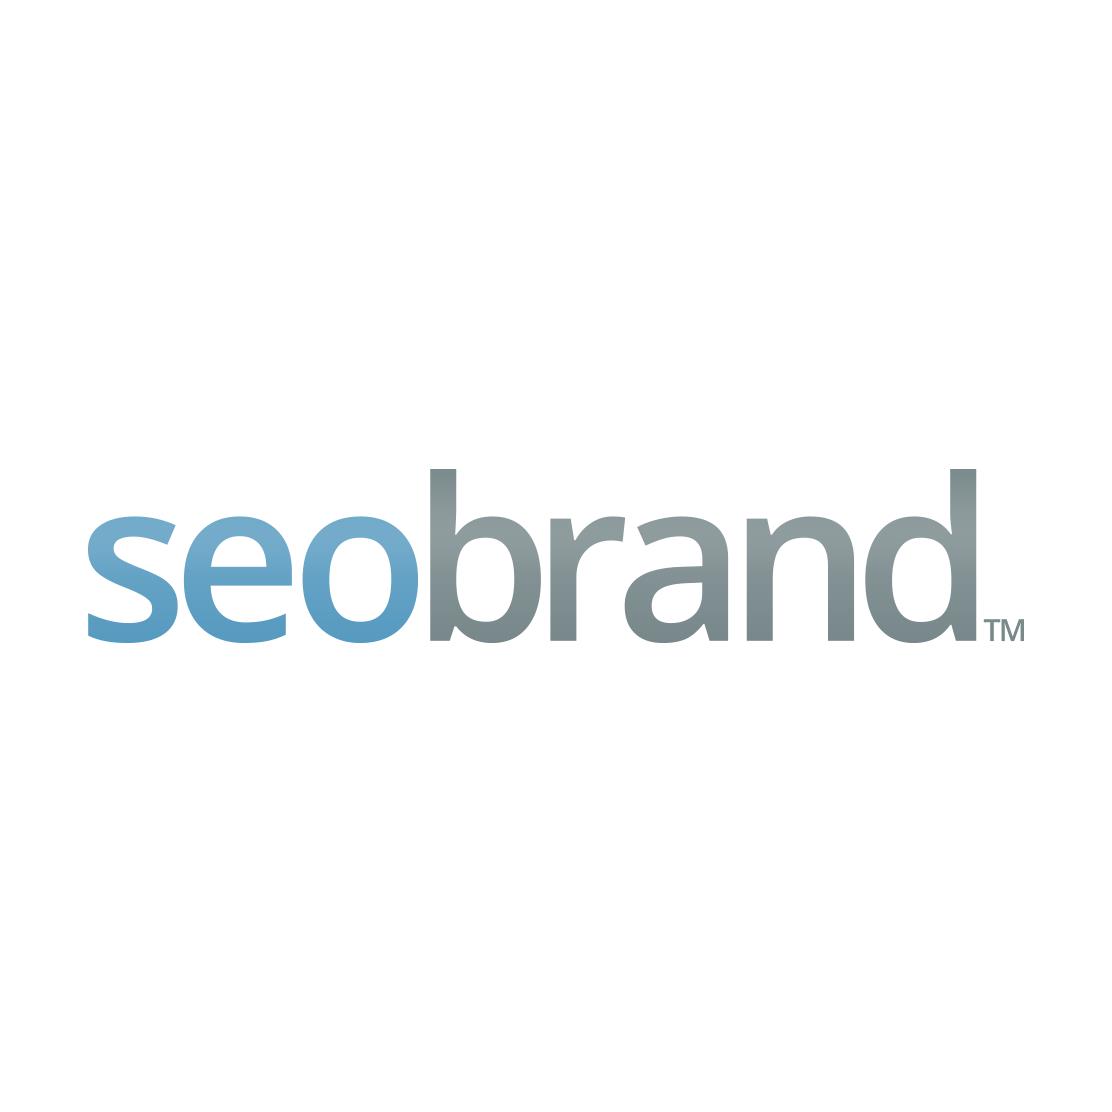 Best Reputation Management Company Logo: SEO Brand